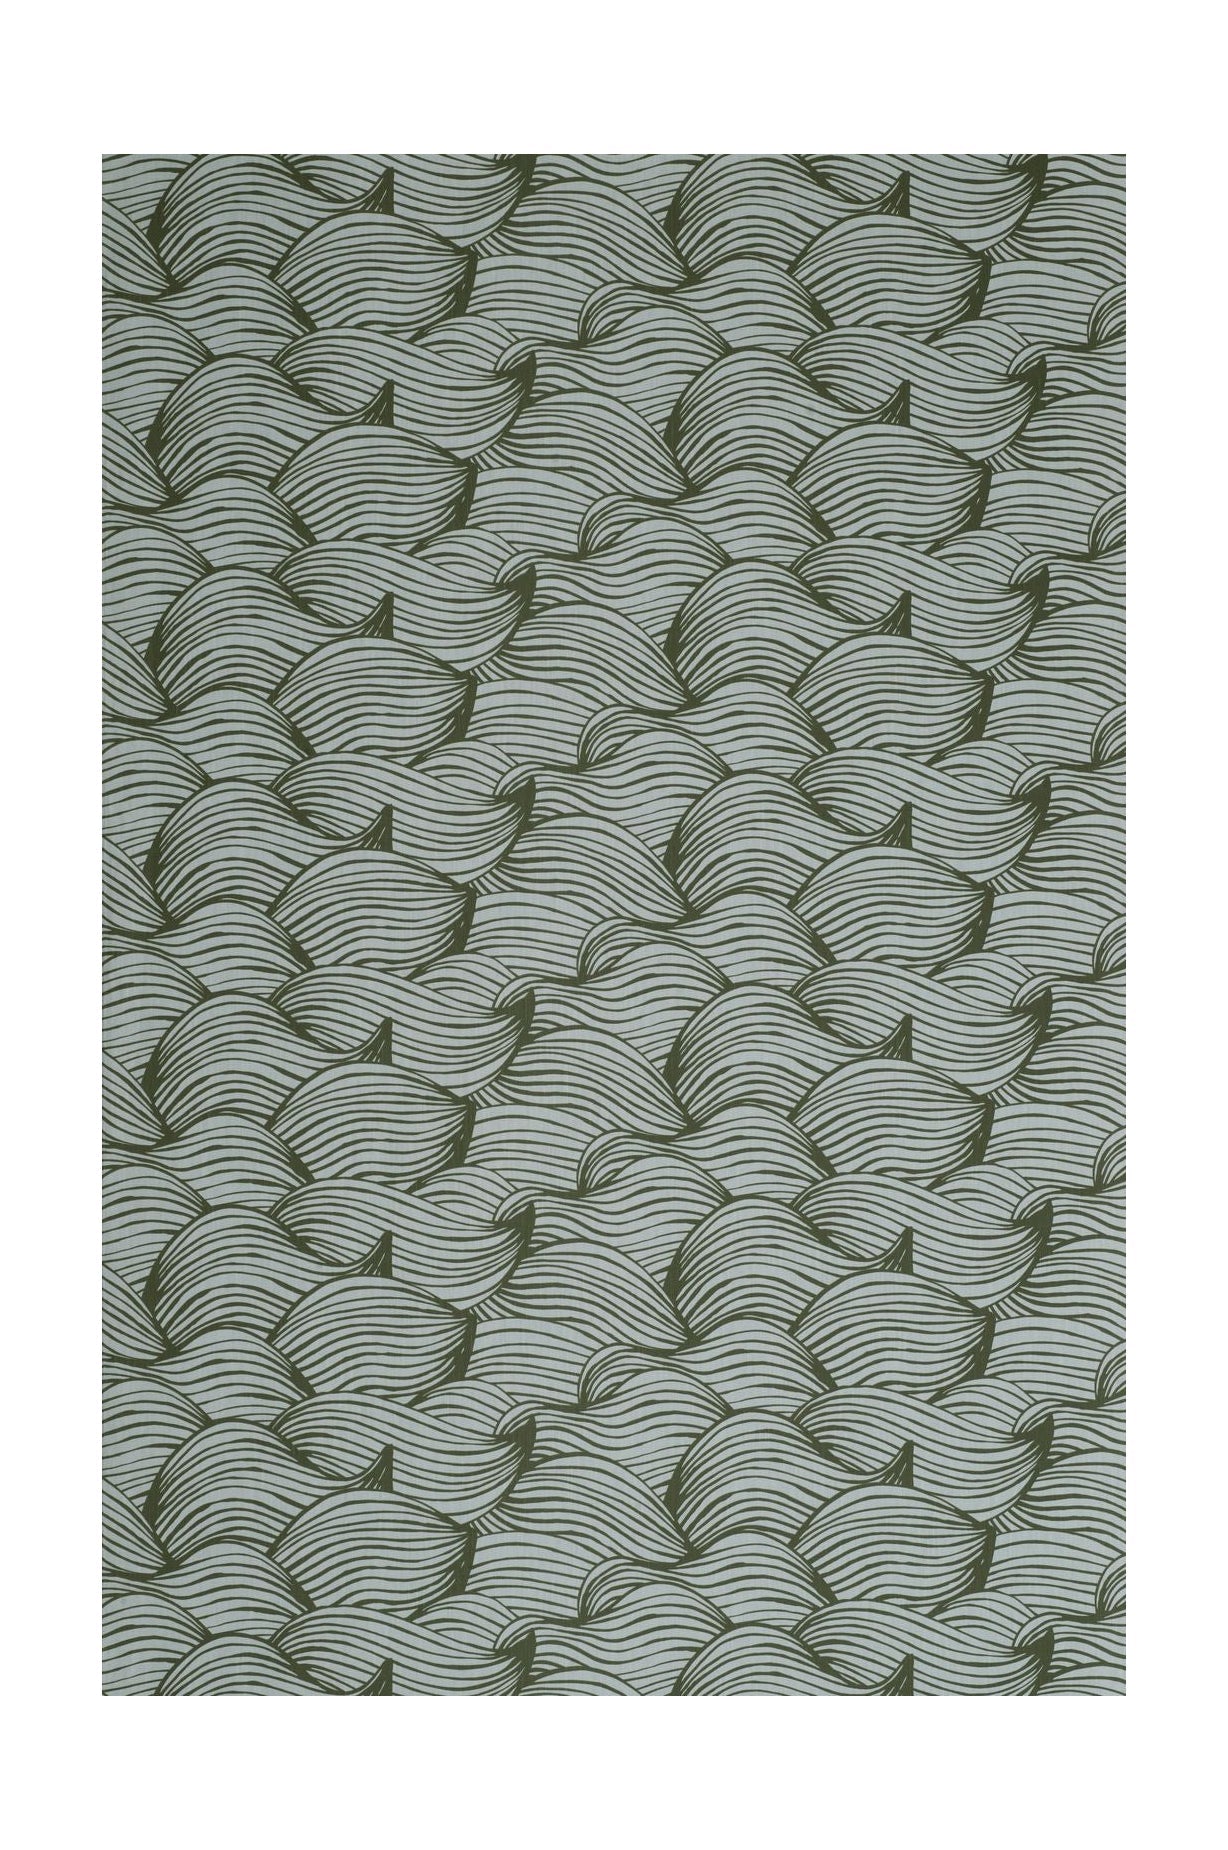 Spira Wave Fabric Width 150 Cm (Price Per Meter), Green